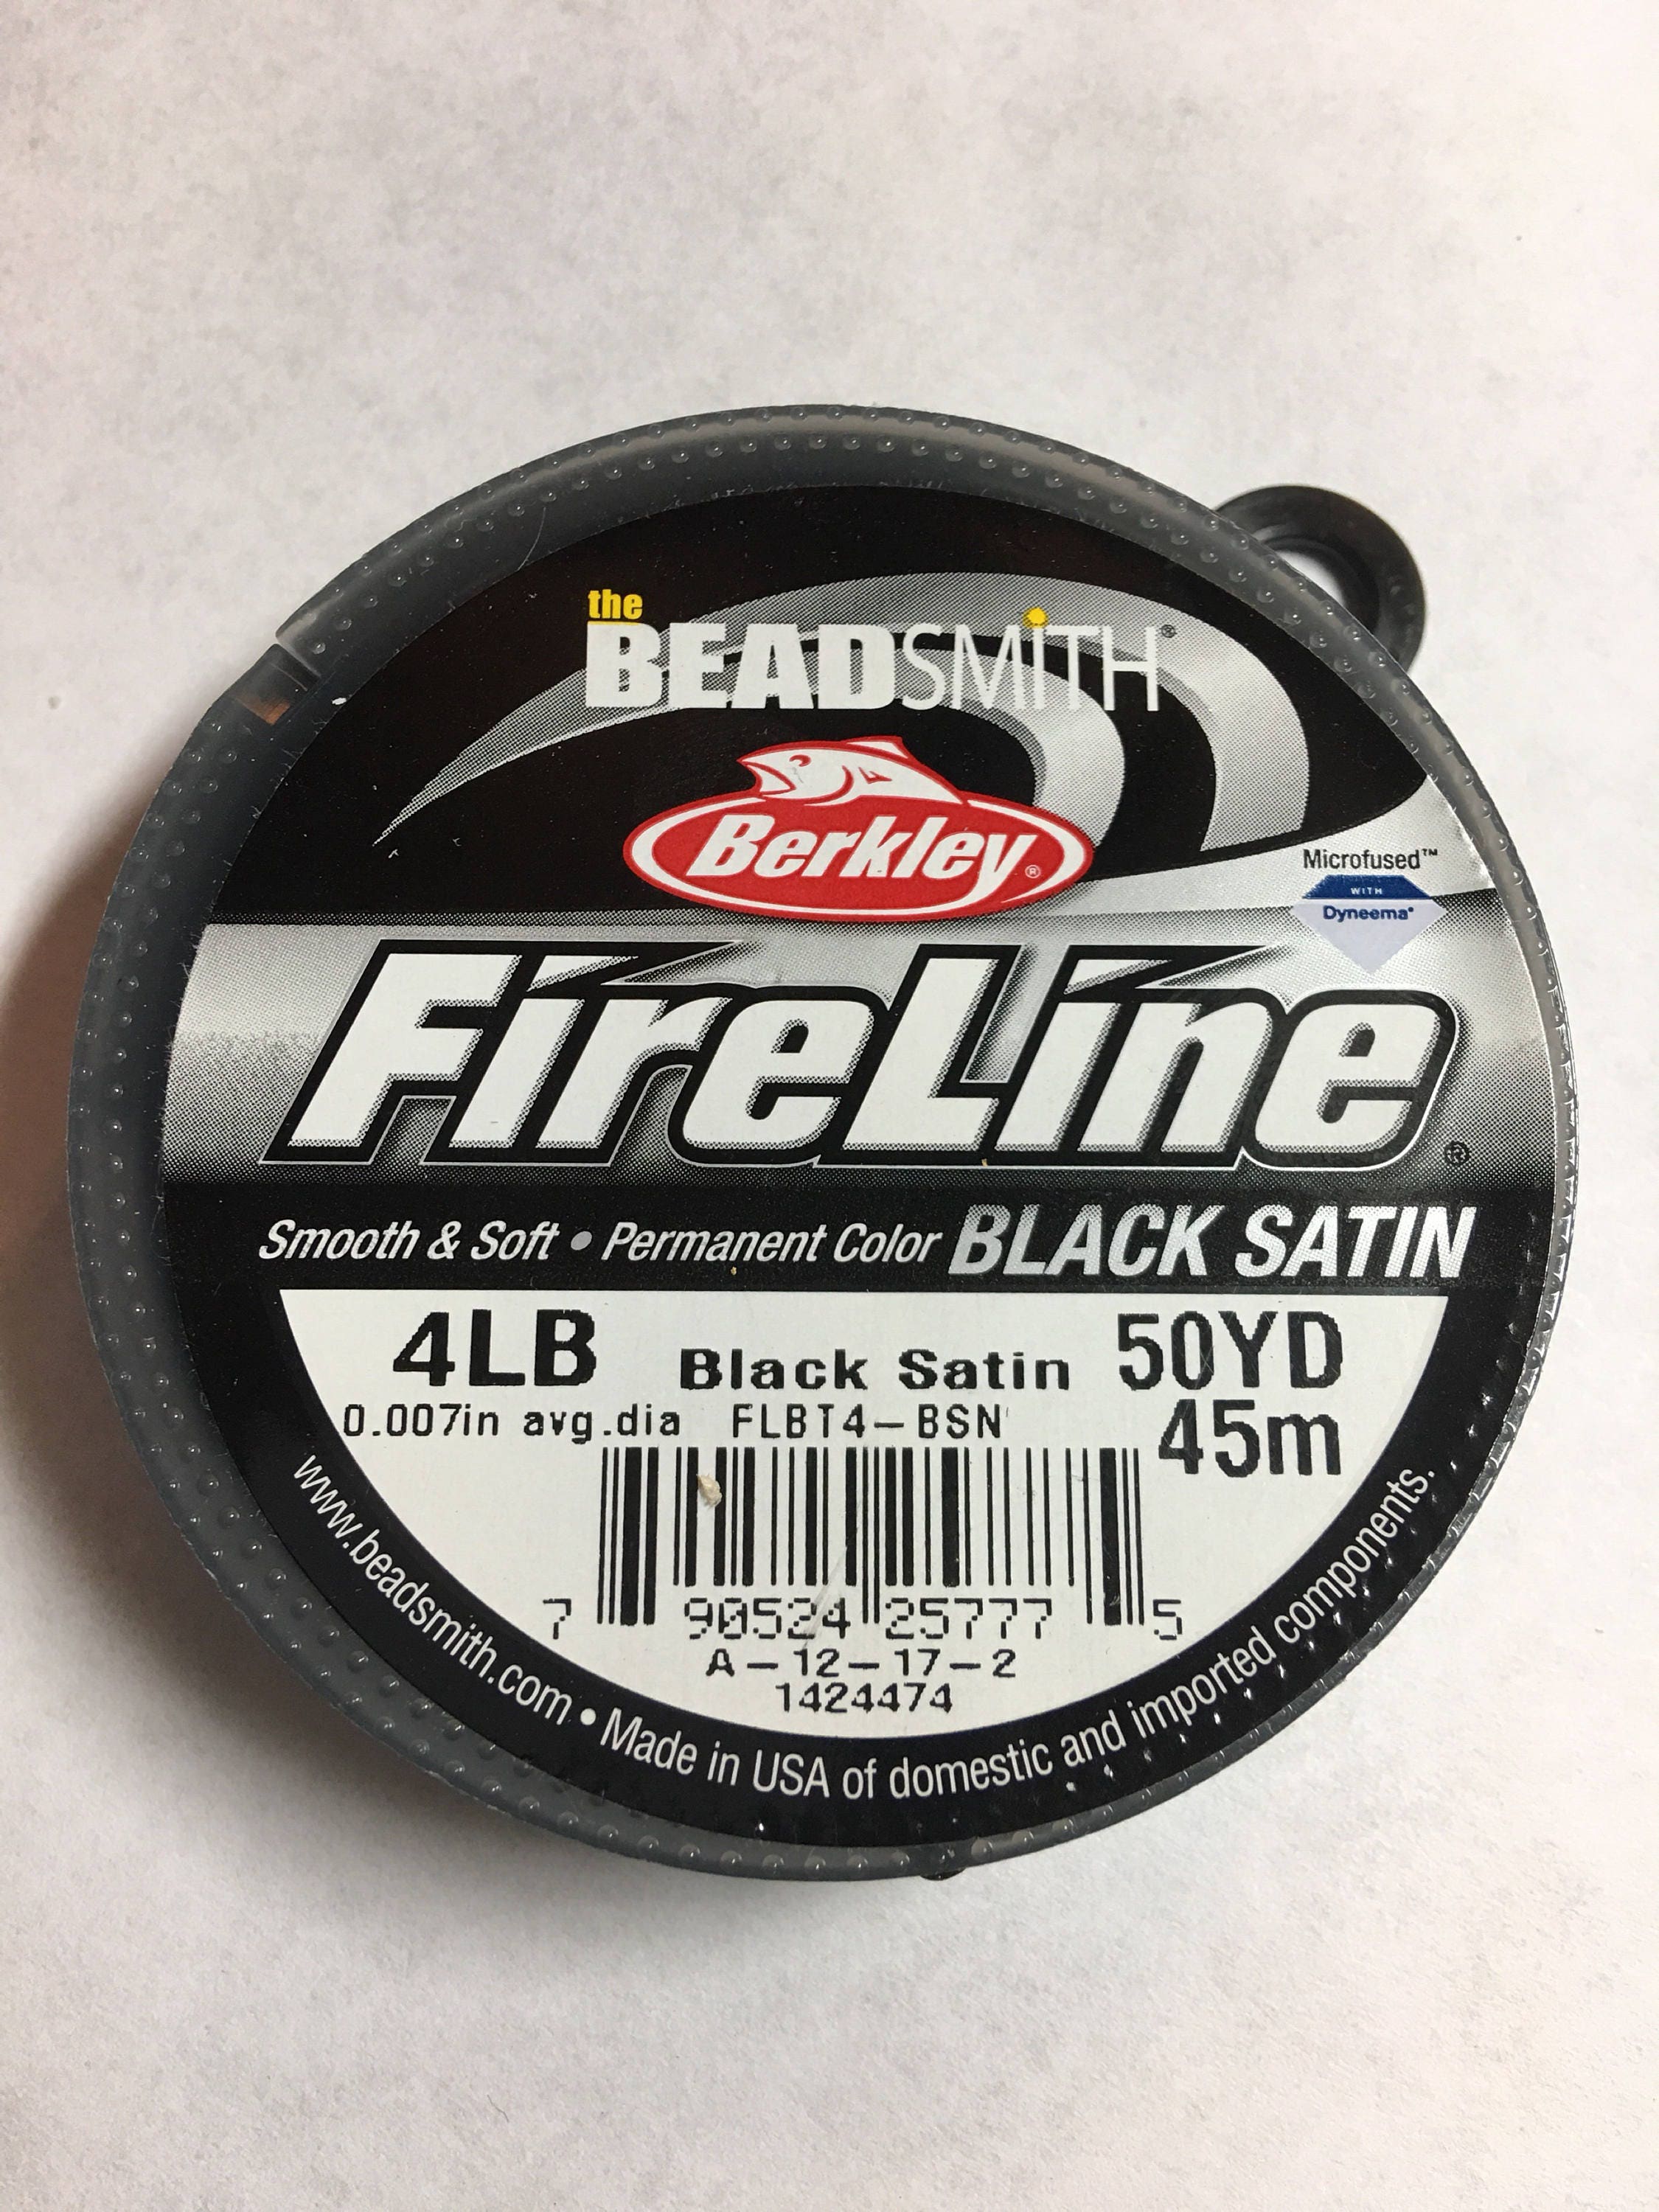 4 Lb OR 6 Lb Fireline Bead Thread, Fireline Beading Thread, 4lb or 6lb  Smoke or Crystal Fireline 5368 5369 6167 6167CR 222F 